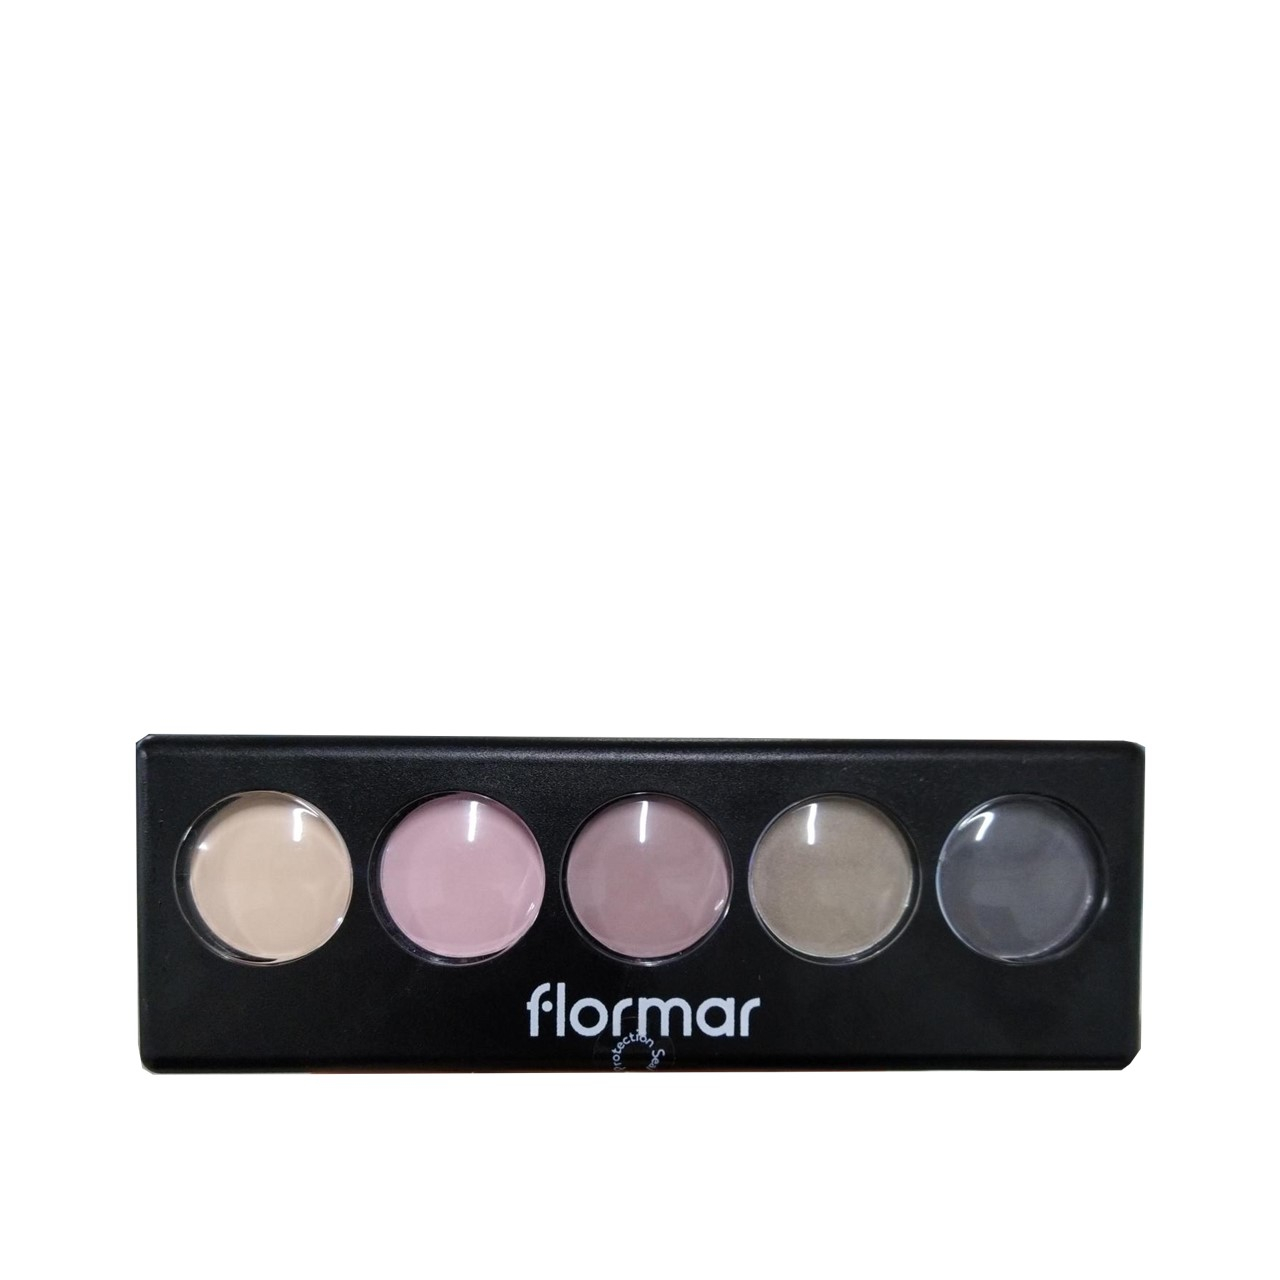 Flormar Color Palette Eyeshadow 08 Dance Of Sepia 9g (0.32oz)